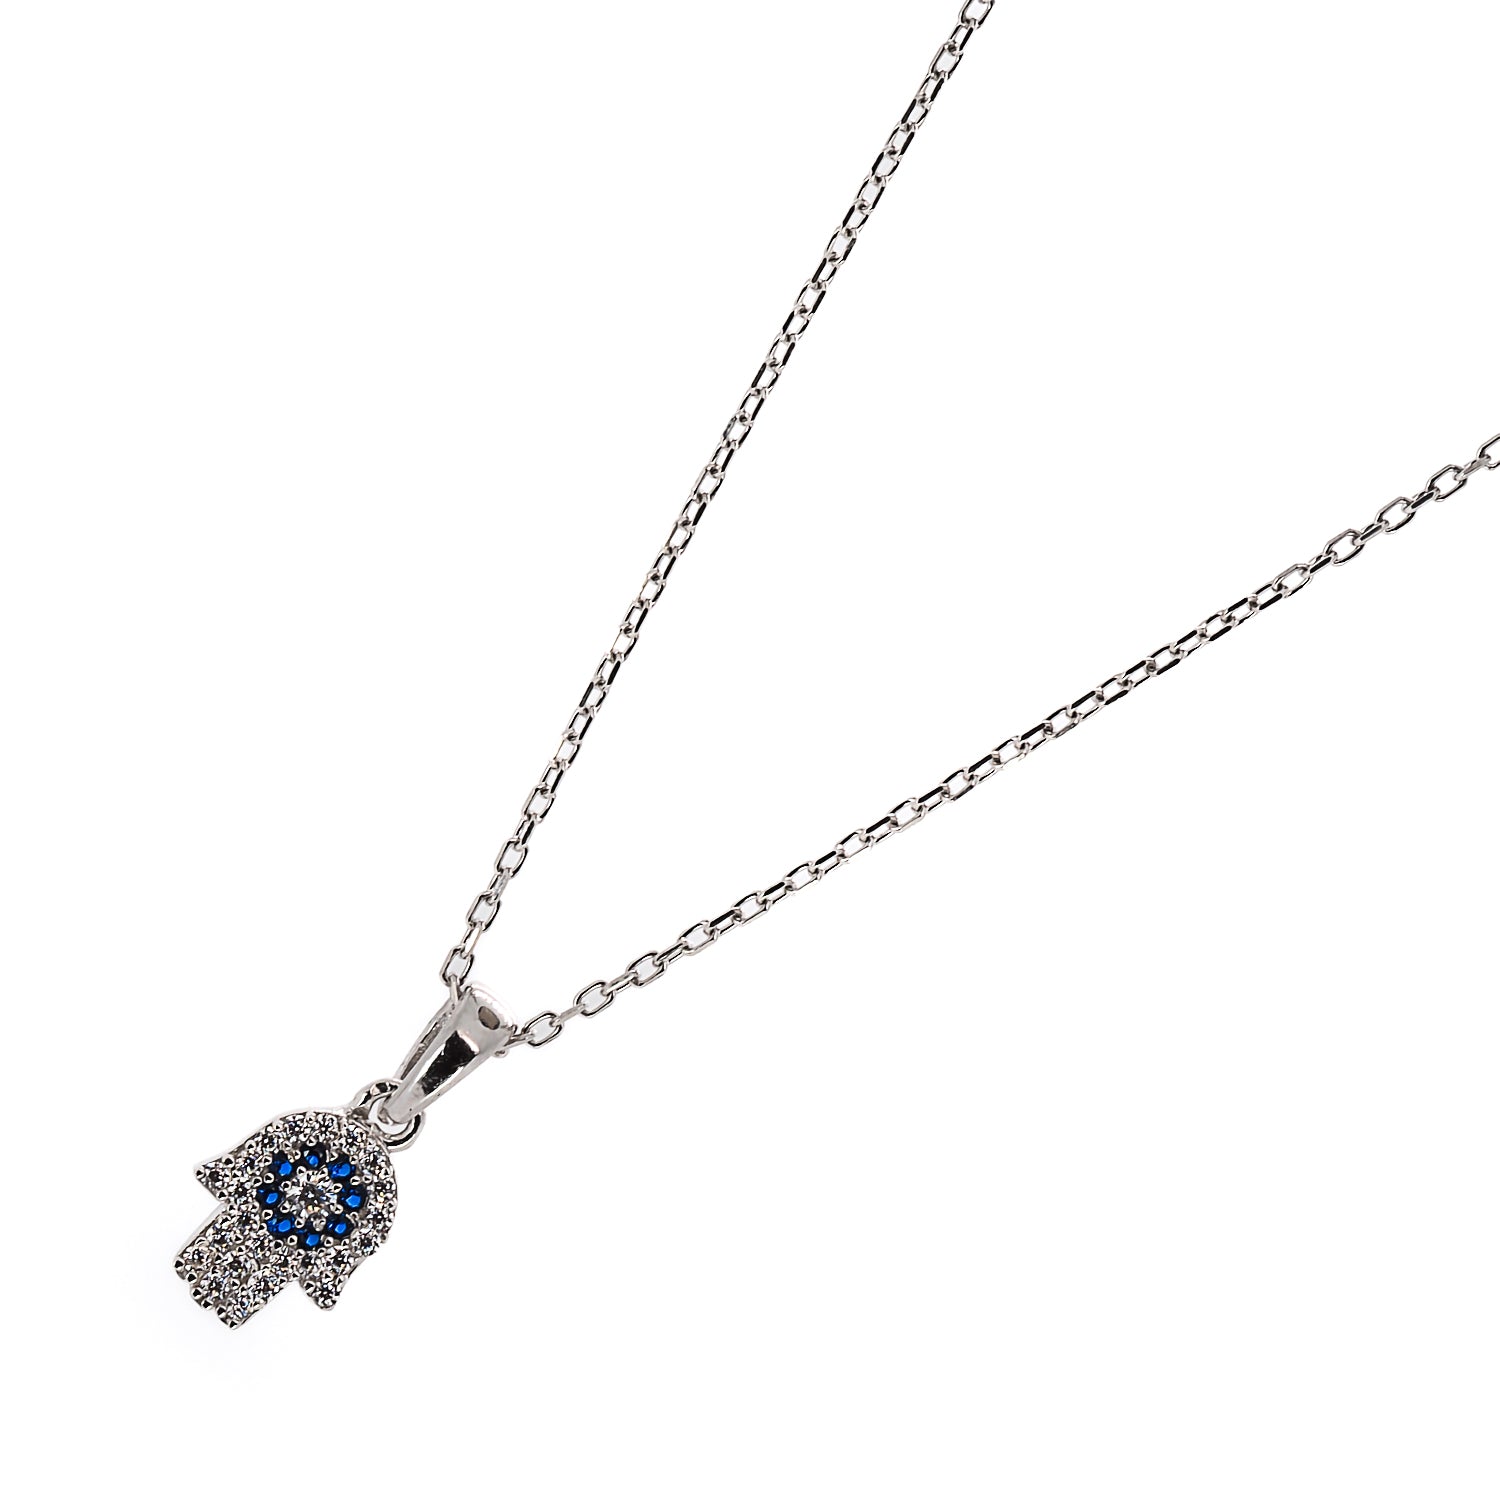 Elegant Silver Hamsa Hand Pendant Necklace - Exuding Timeless Beauty and Elegance.